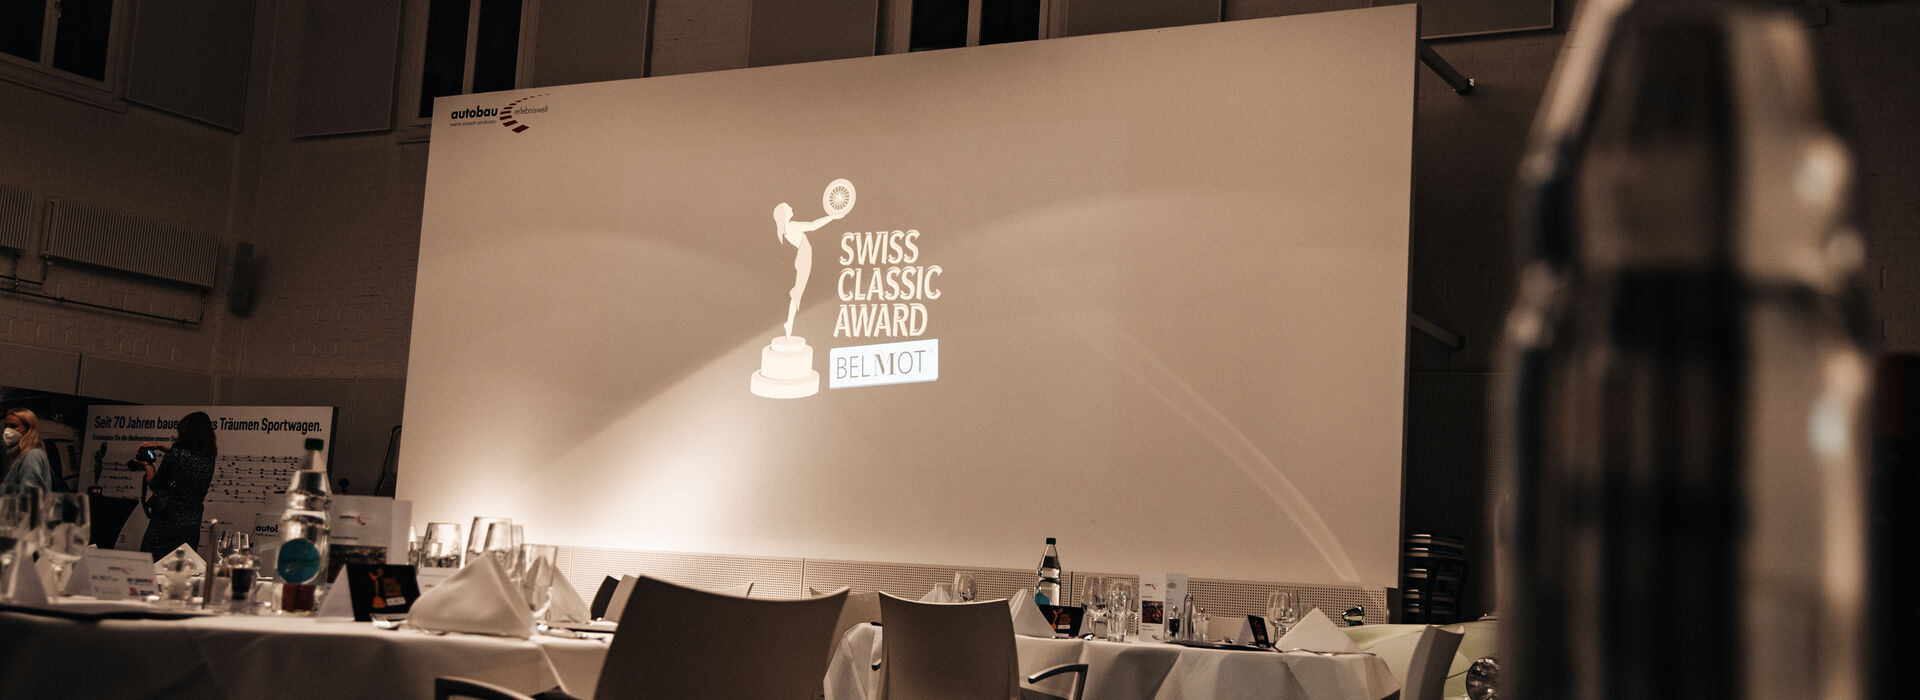 Swiss Classic Award 2020